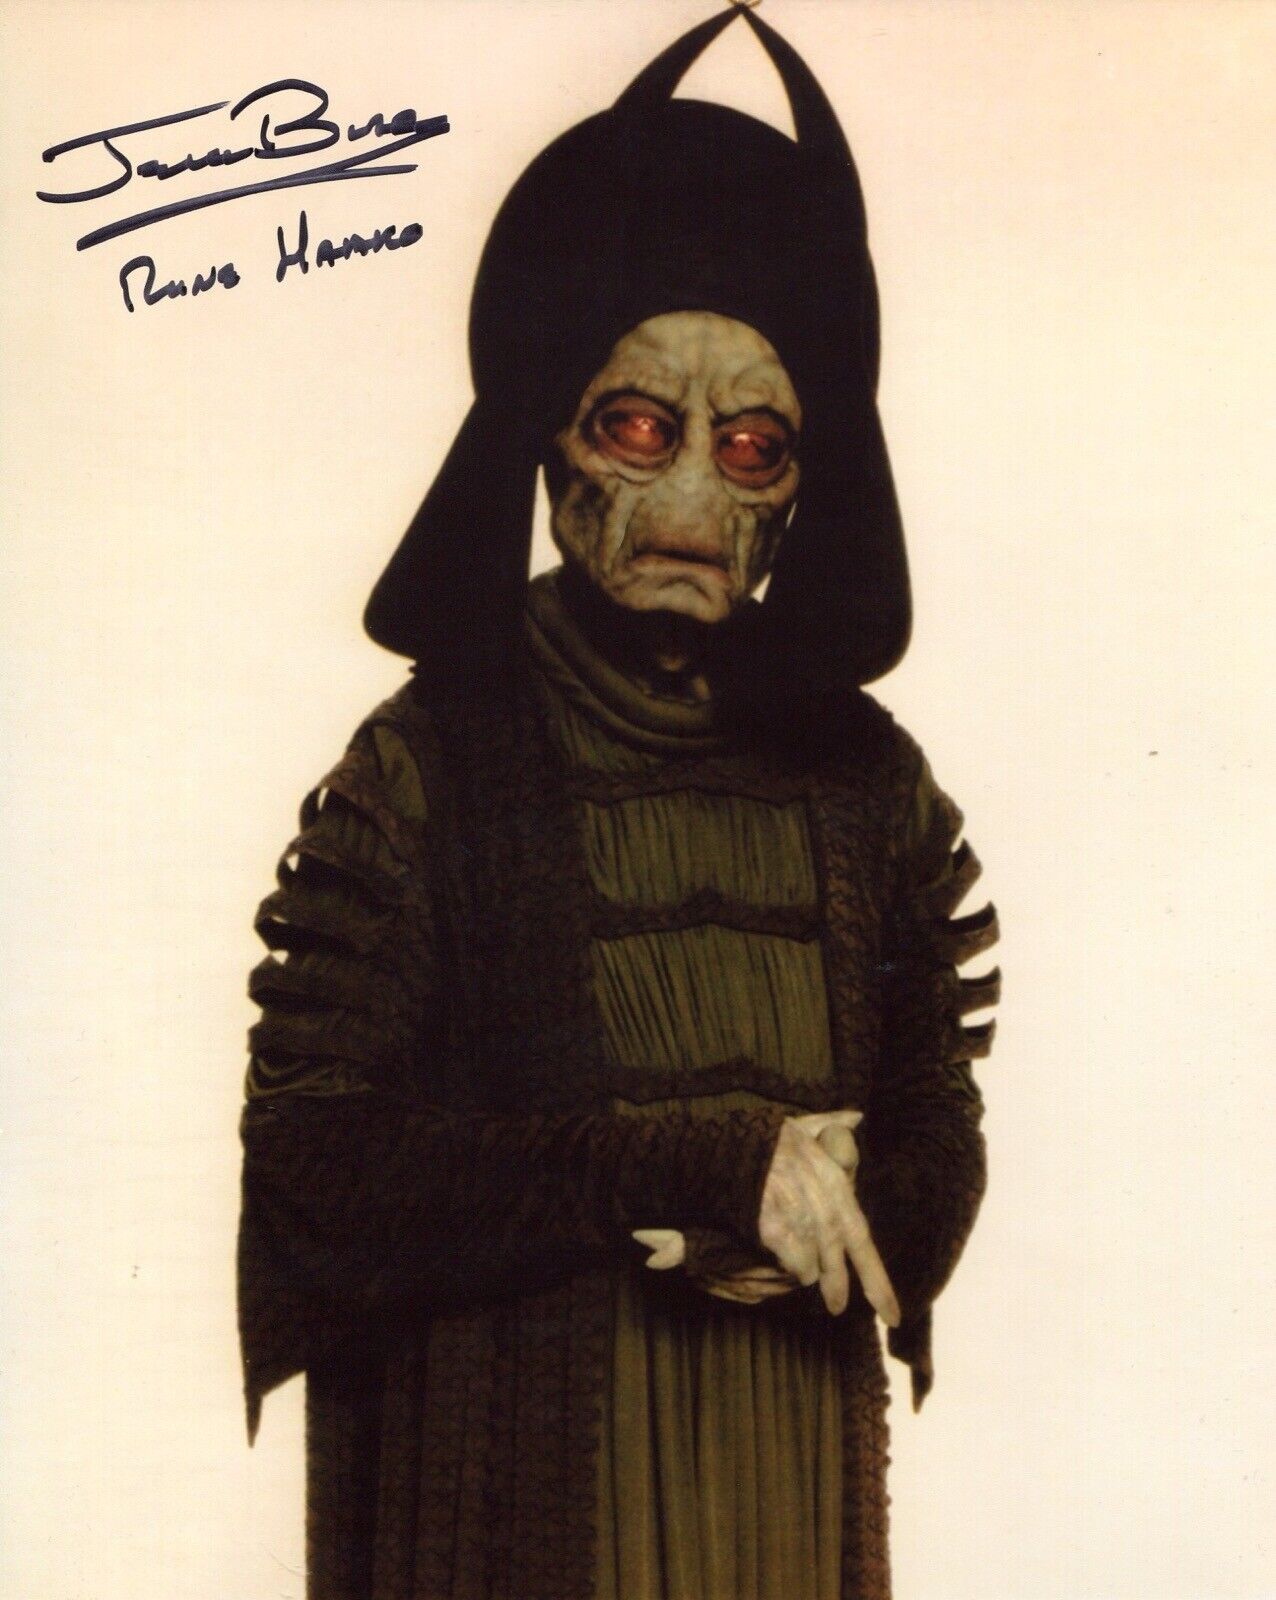 Star Wars Photo Poster painting signed by Jerome Blake as Rune Hakko IMAGE No2